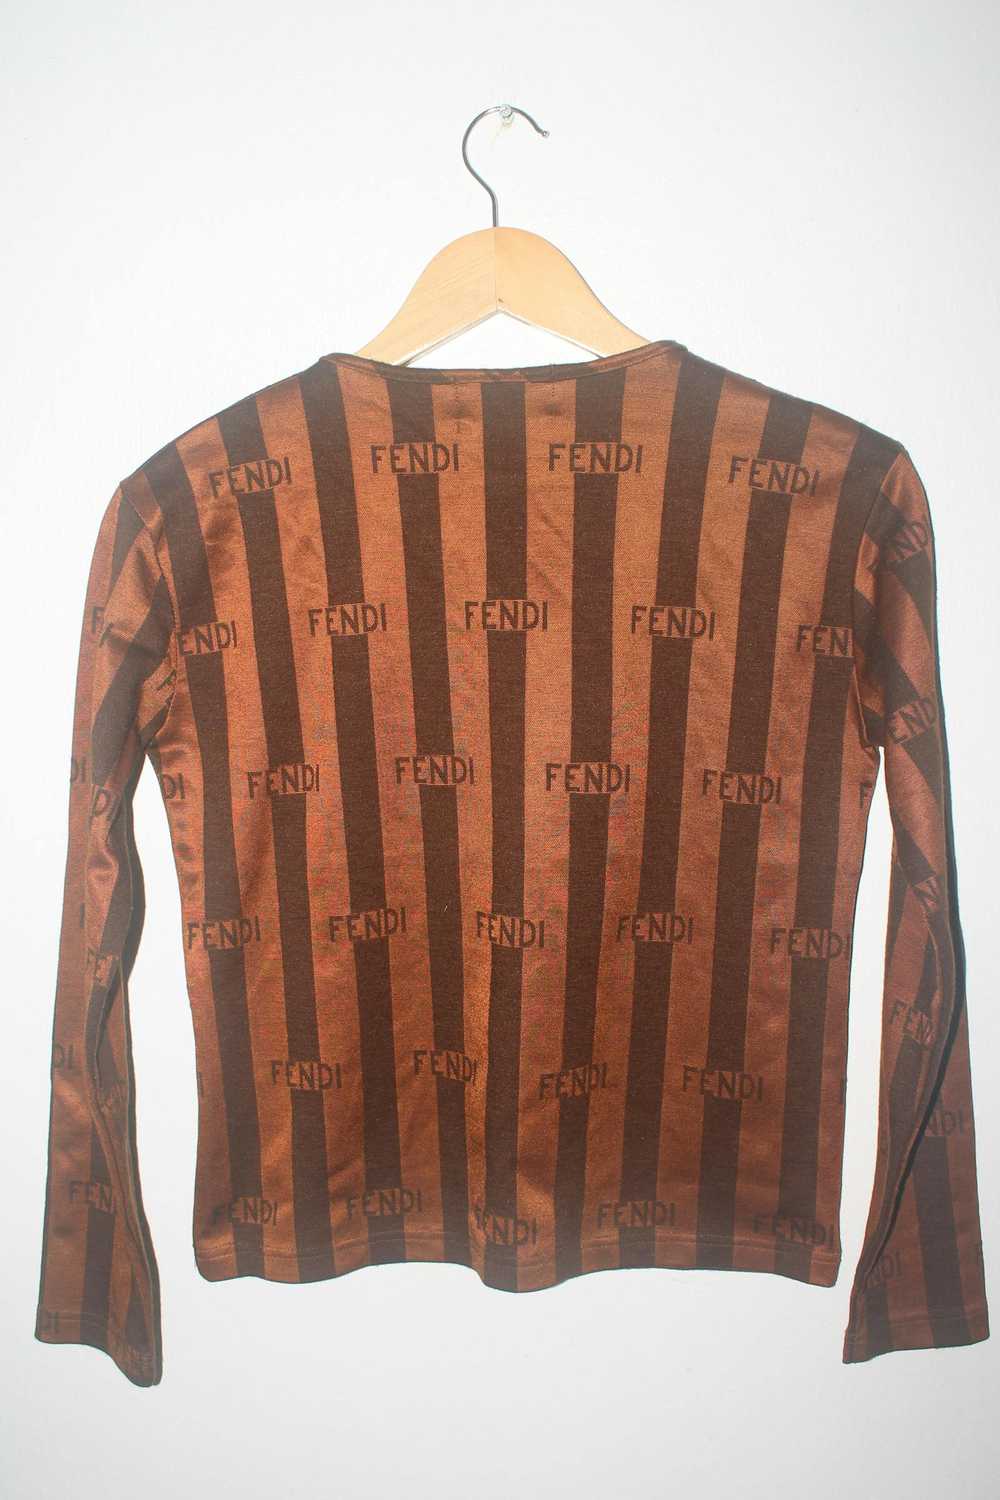 Fendi Vintage FENDI Longsleeve Spellout T shirt f… - image 3